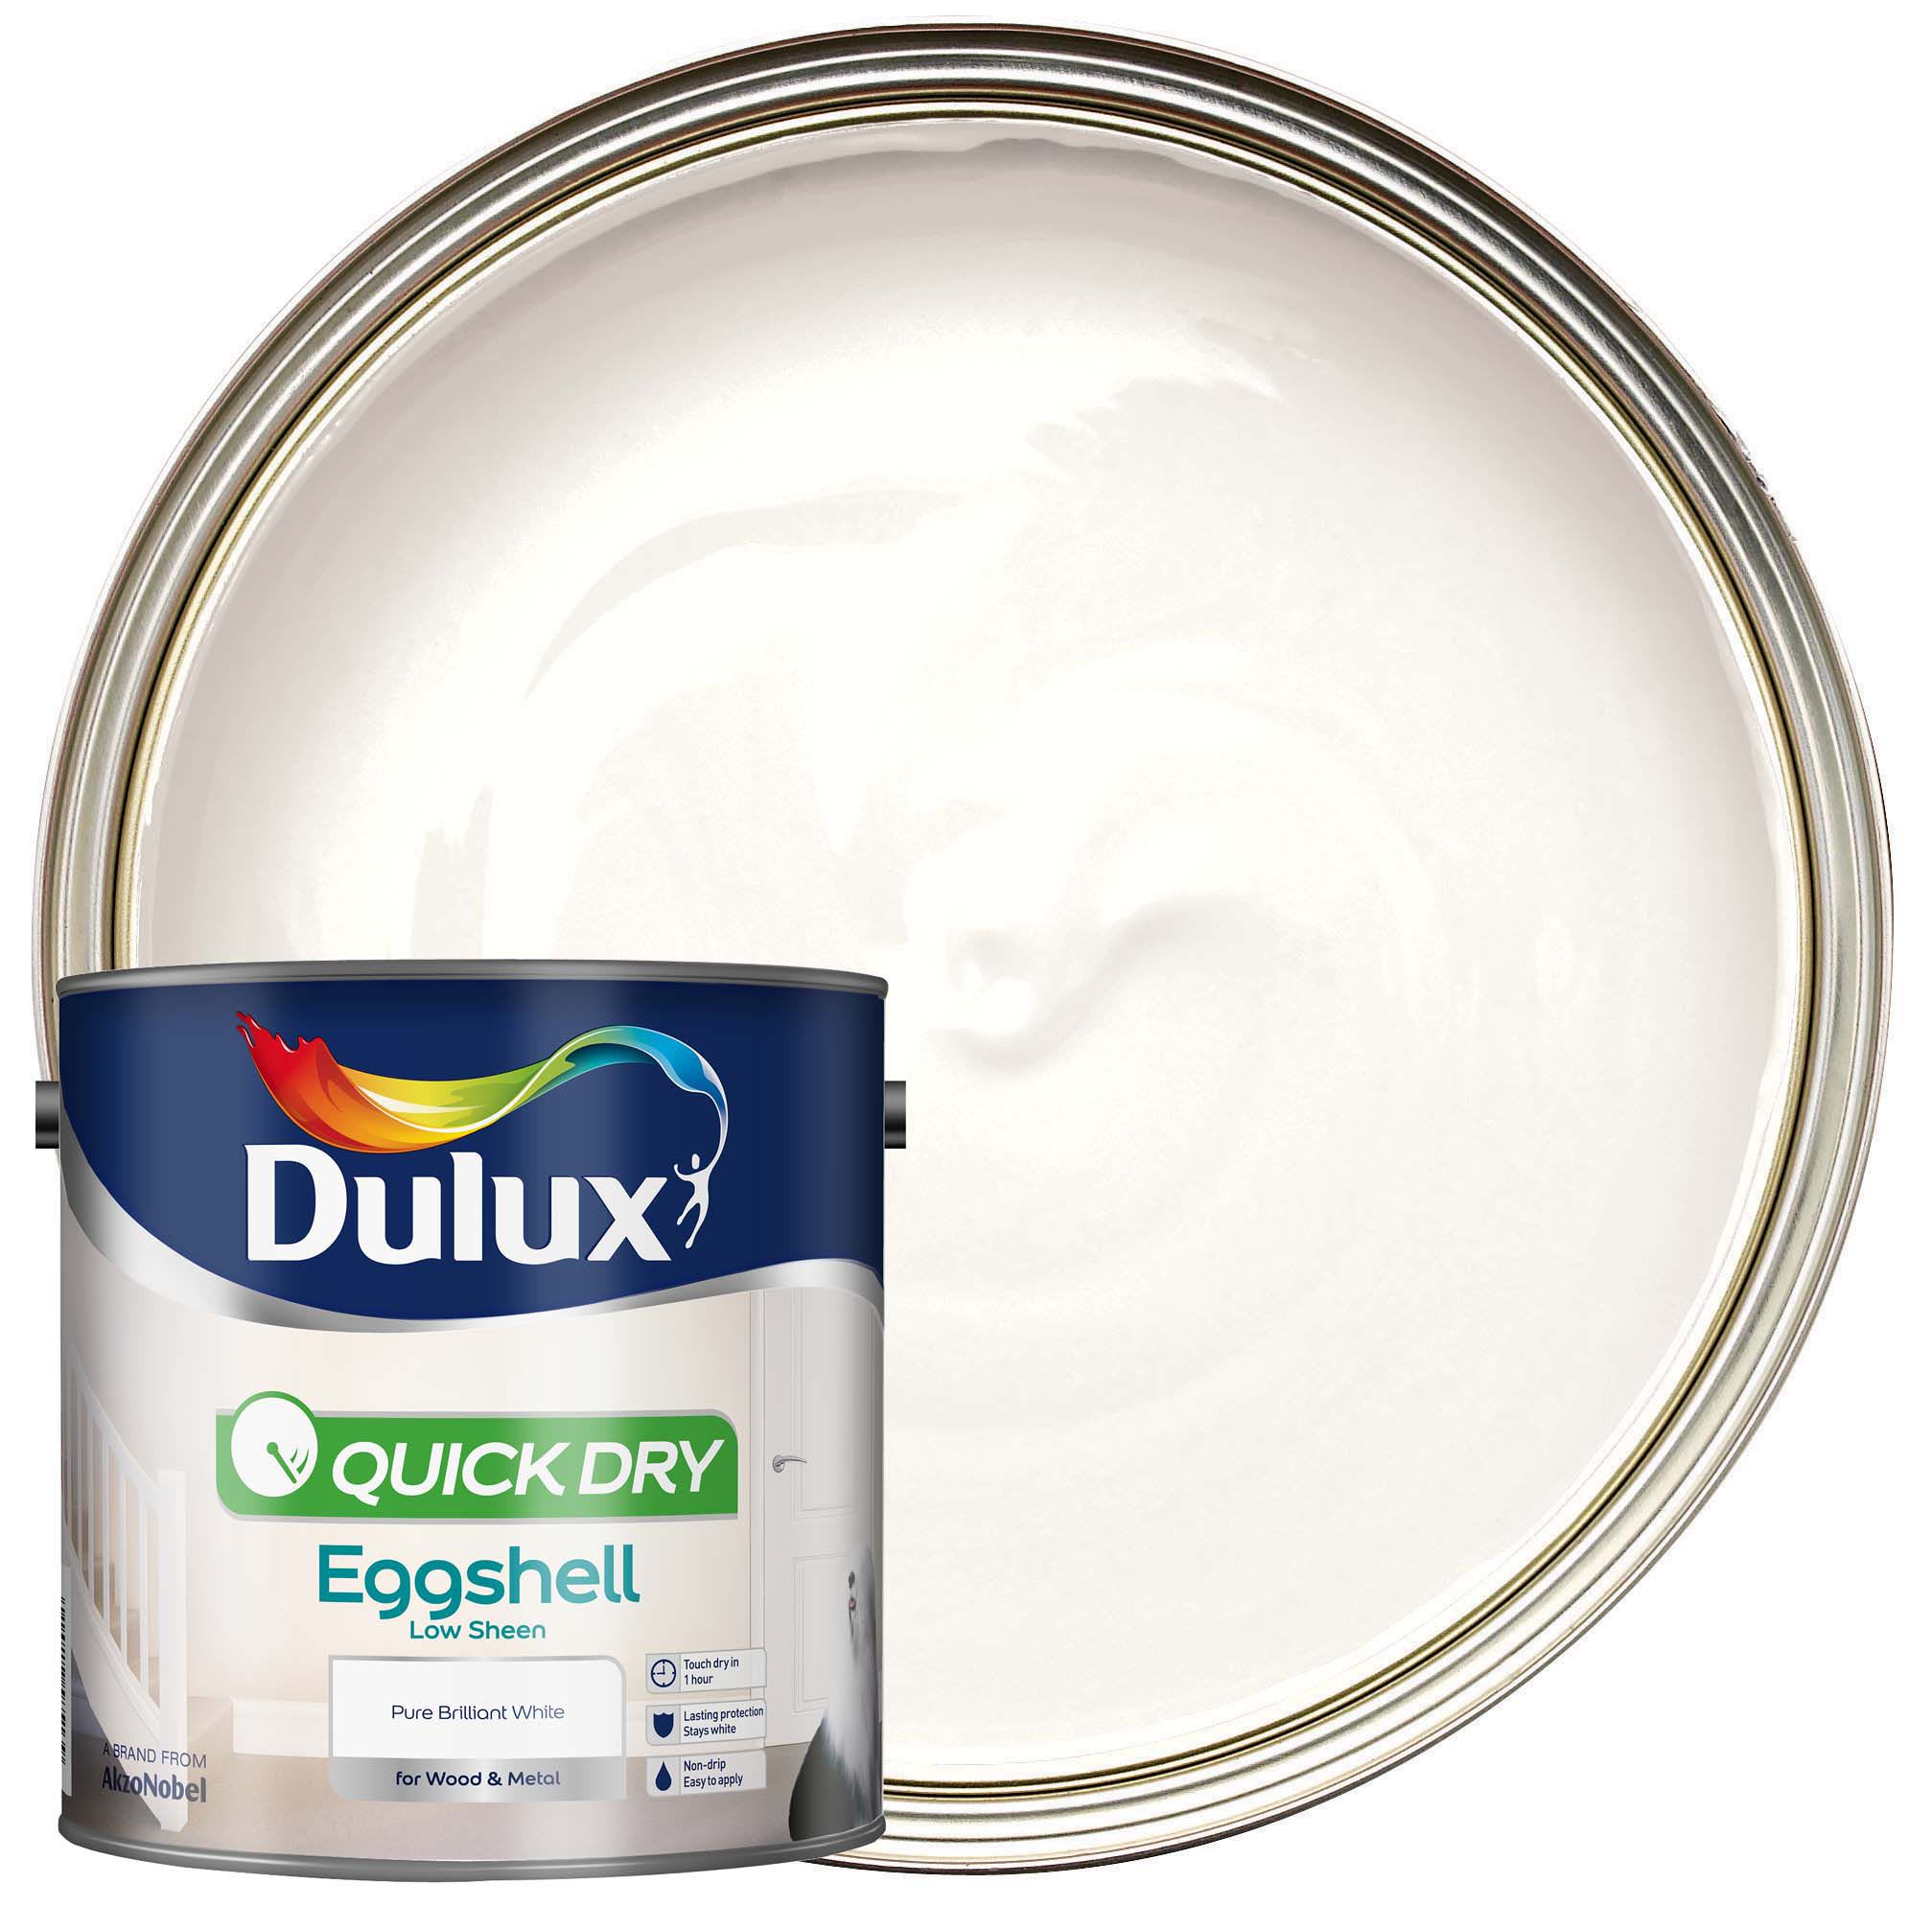 Dulux Quick Dry Eggshell Paint - Pure Brilliant